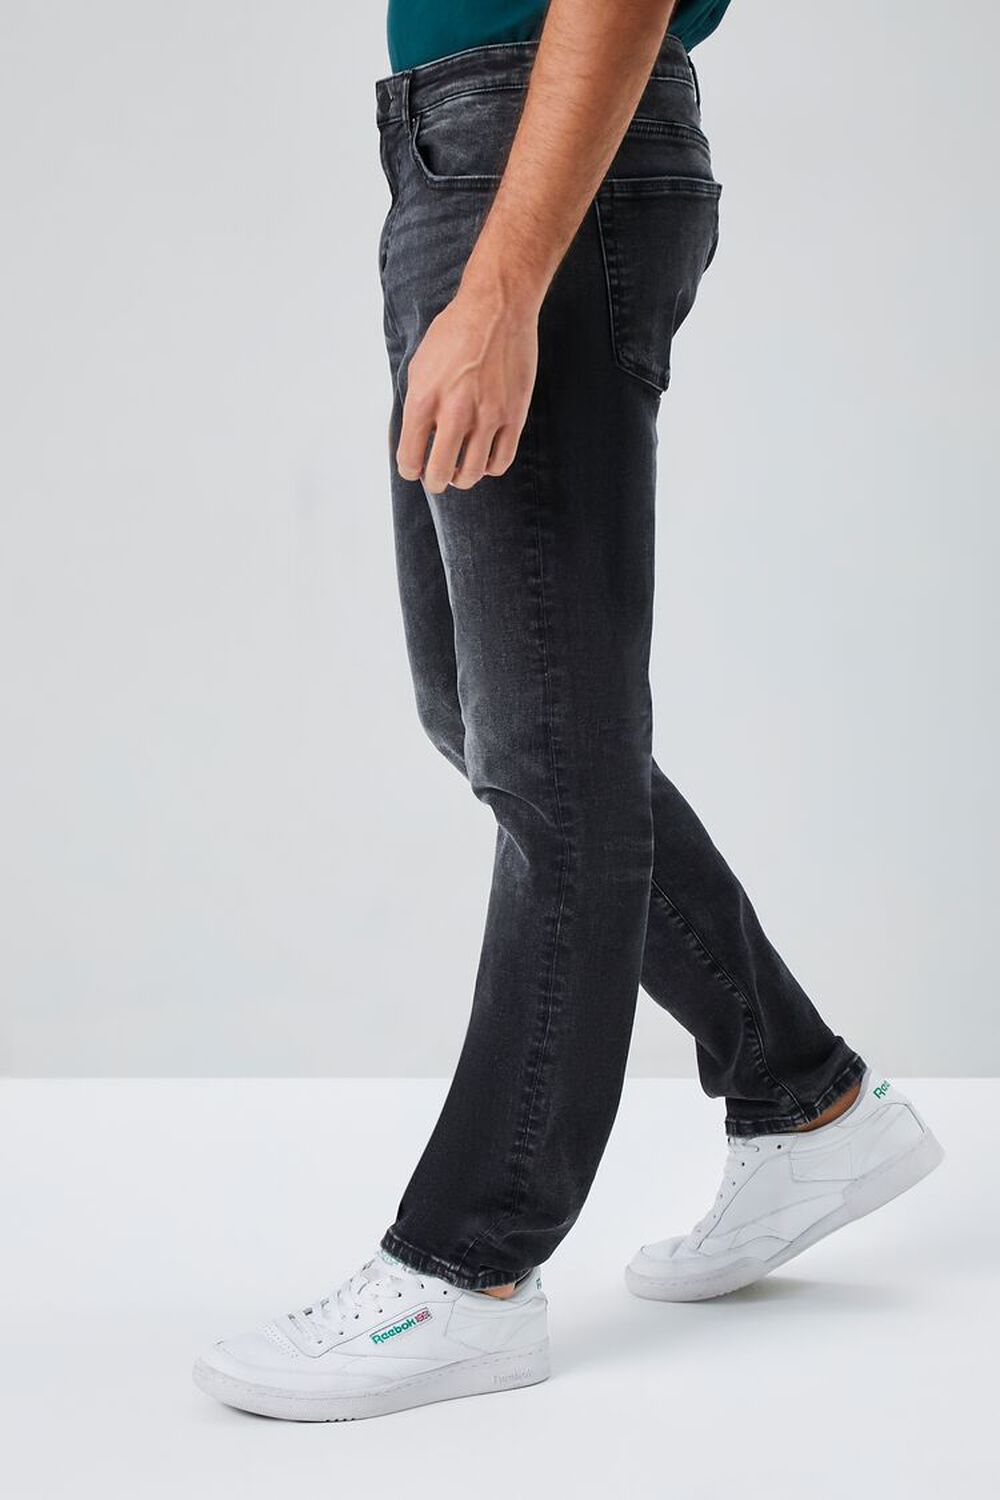 BLACK Stonewash Slim-Fit Jeans, image 3